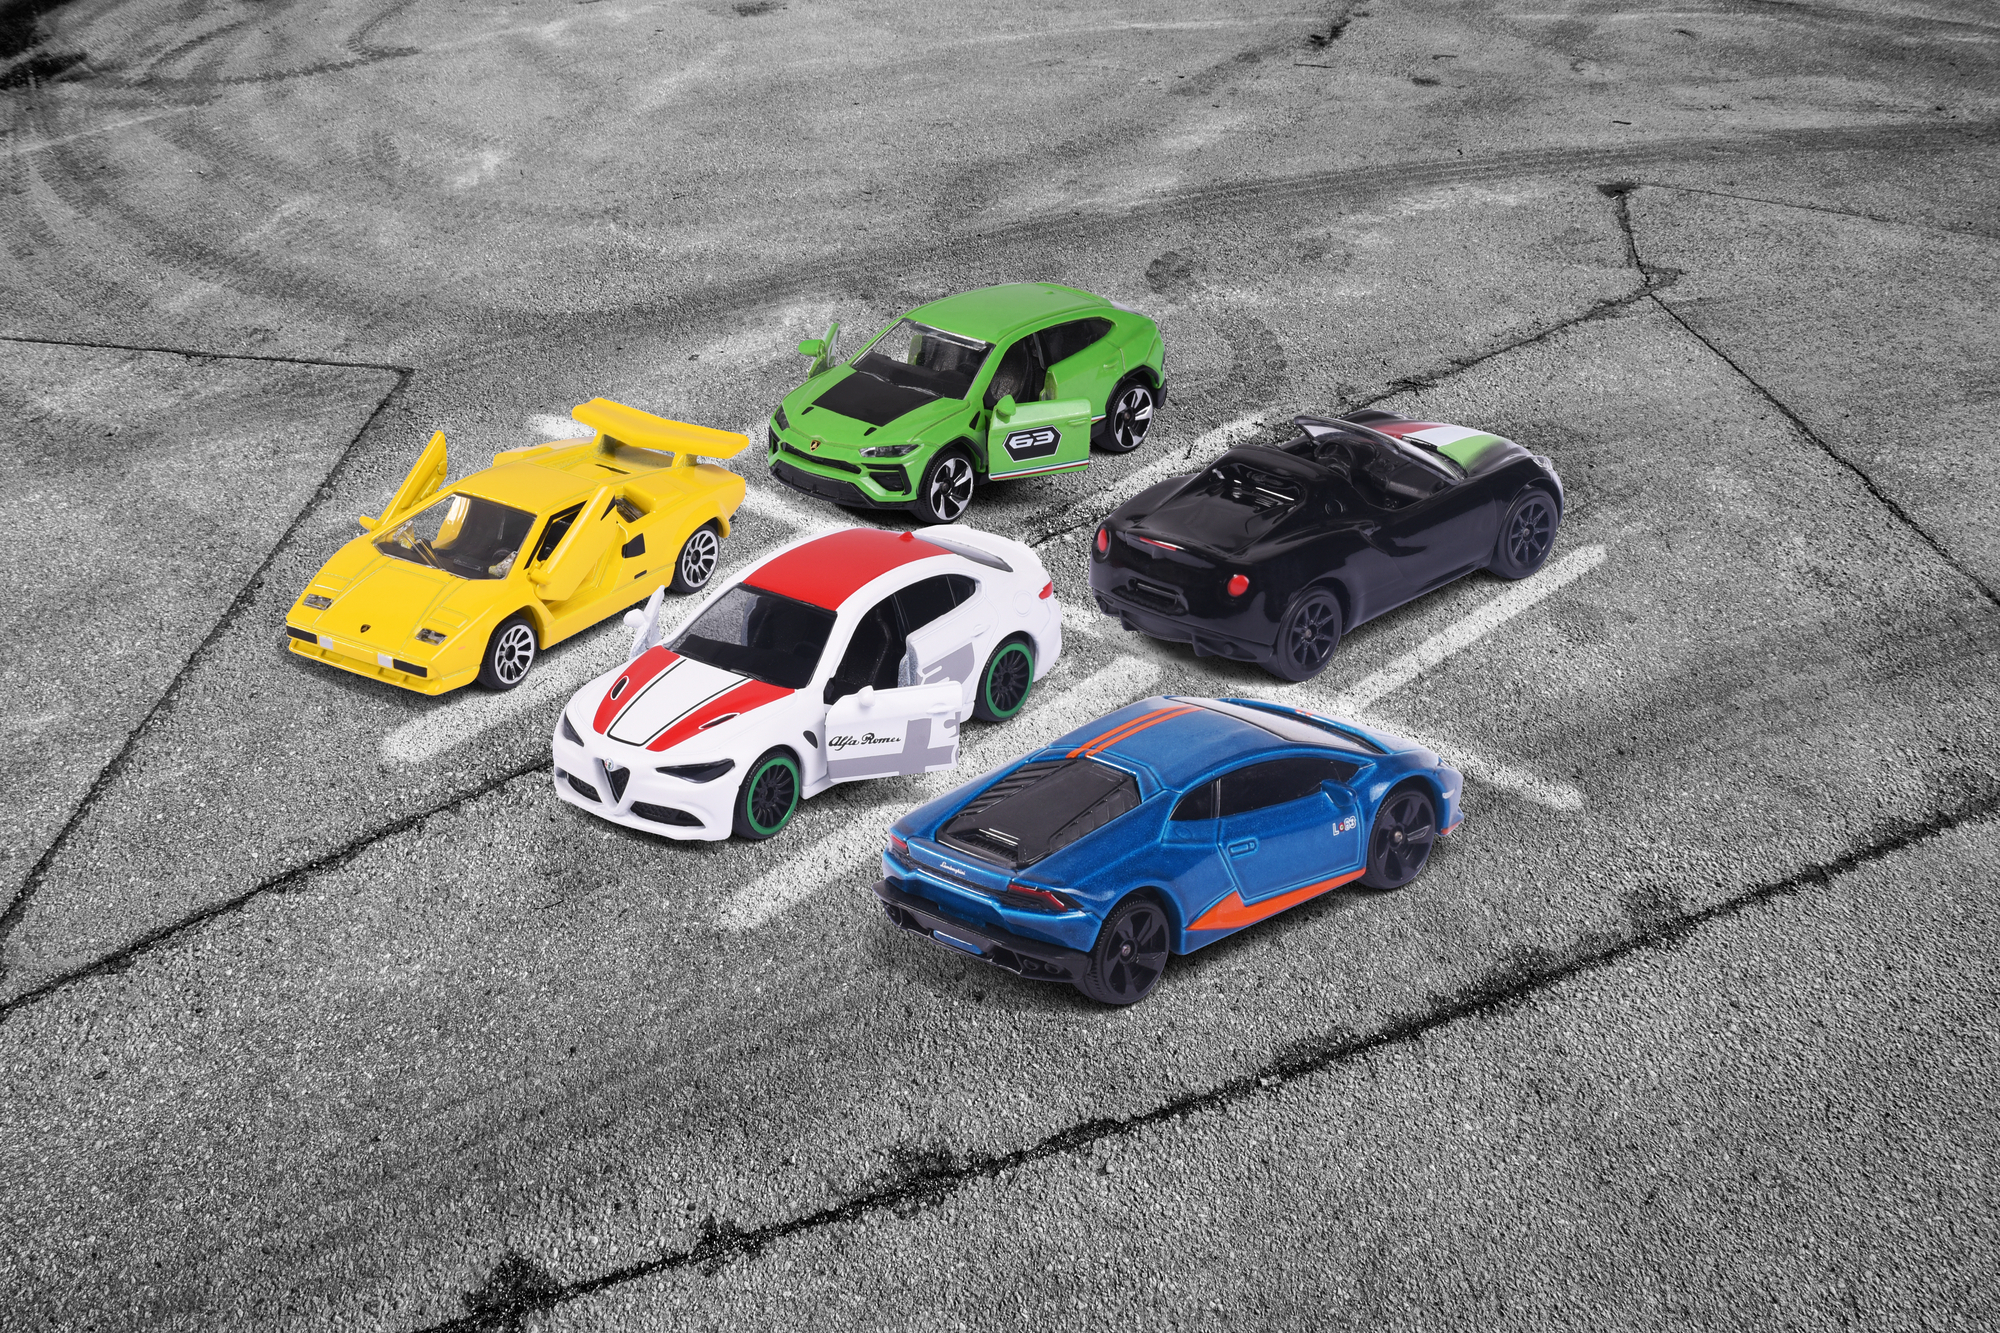 MAJORETTE Dream Cars Italy 5 Spielzeugauto Mehrfarbig Teile Geschenkset